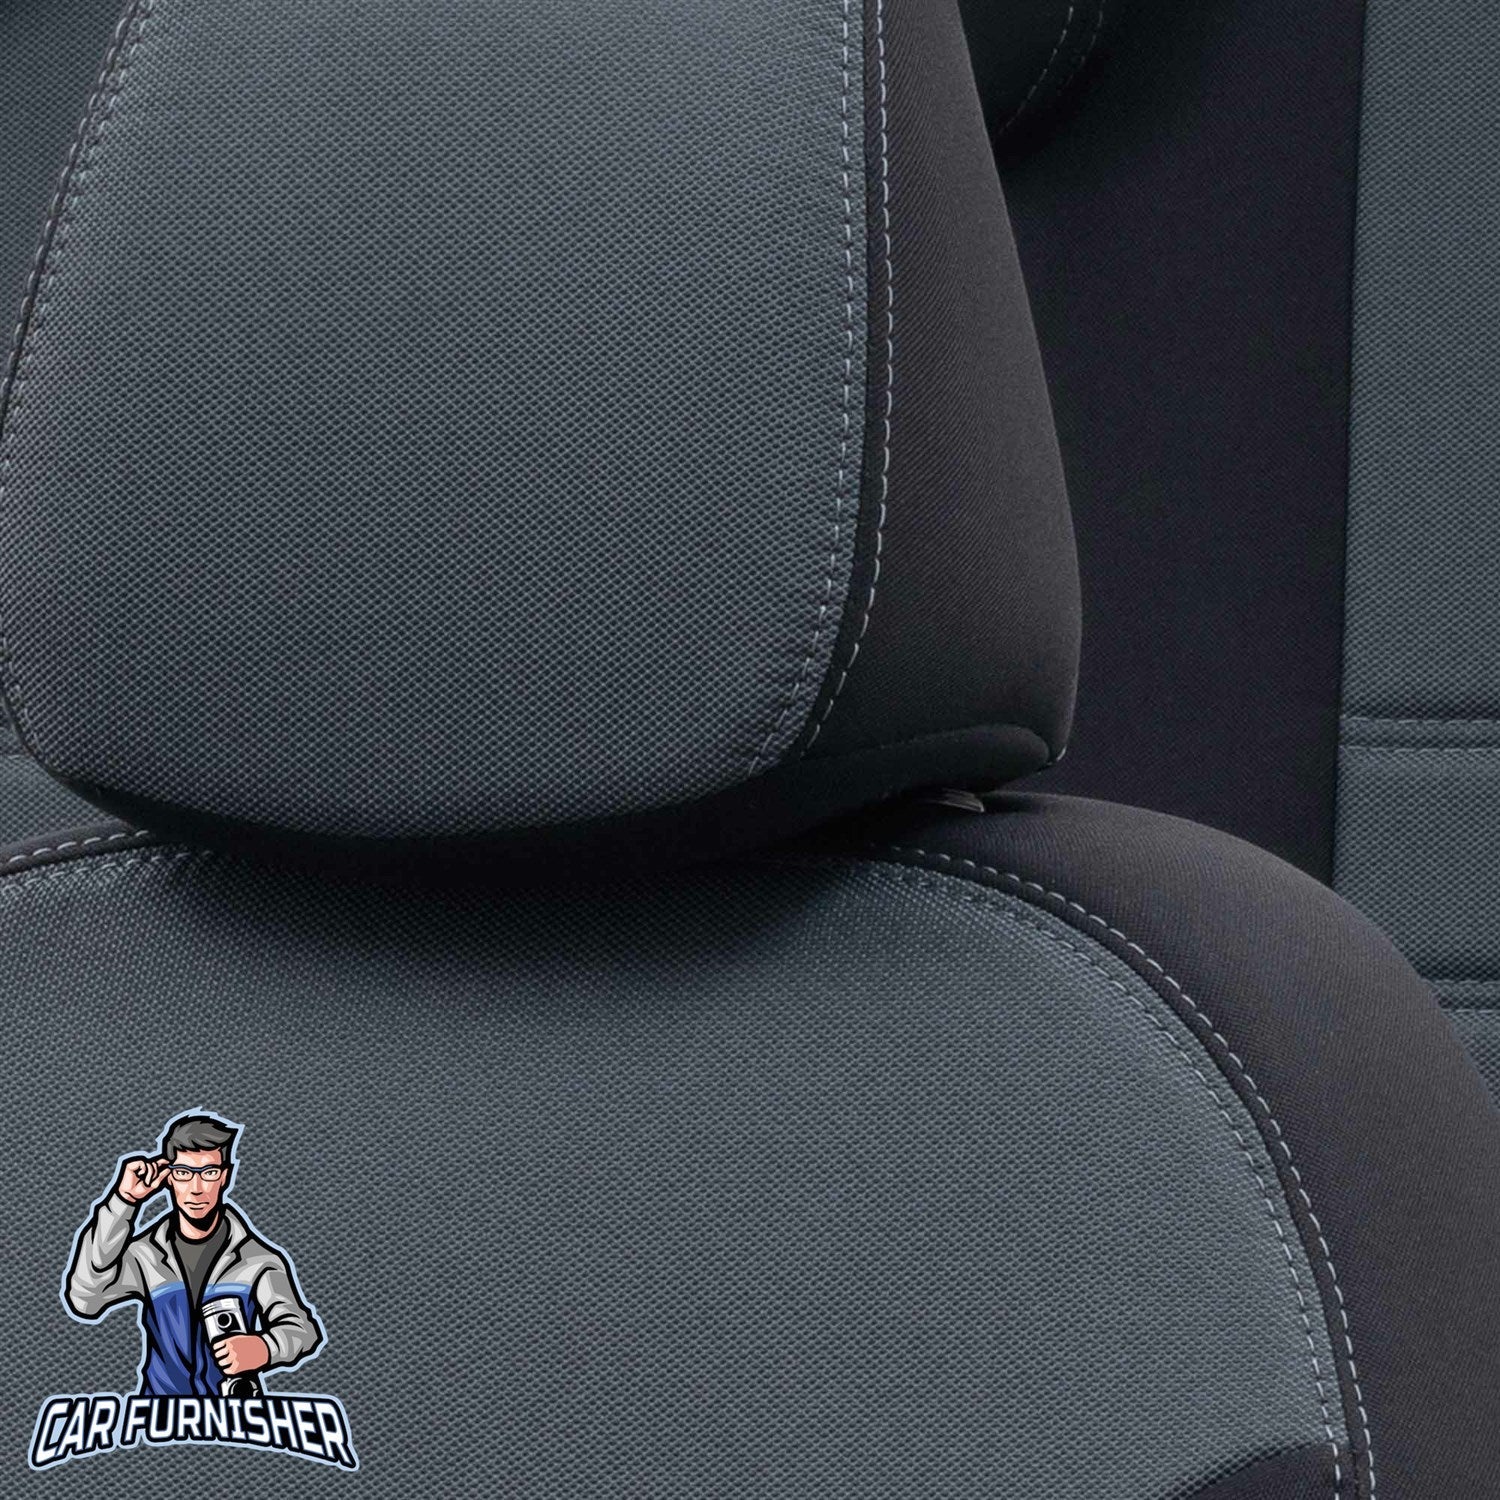 Chery Tiggo Car Seat Covers 2008-2011 Original Design Smoked Black Full Set (5 Seats + Handrest) Fabric